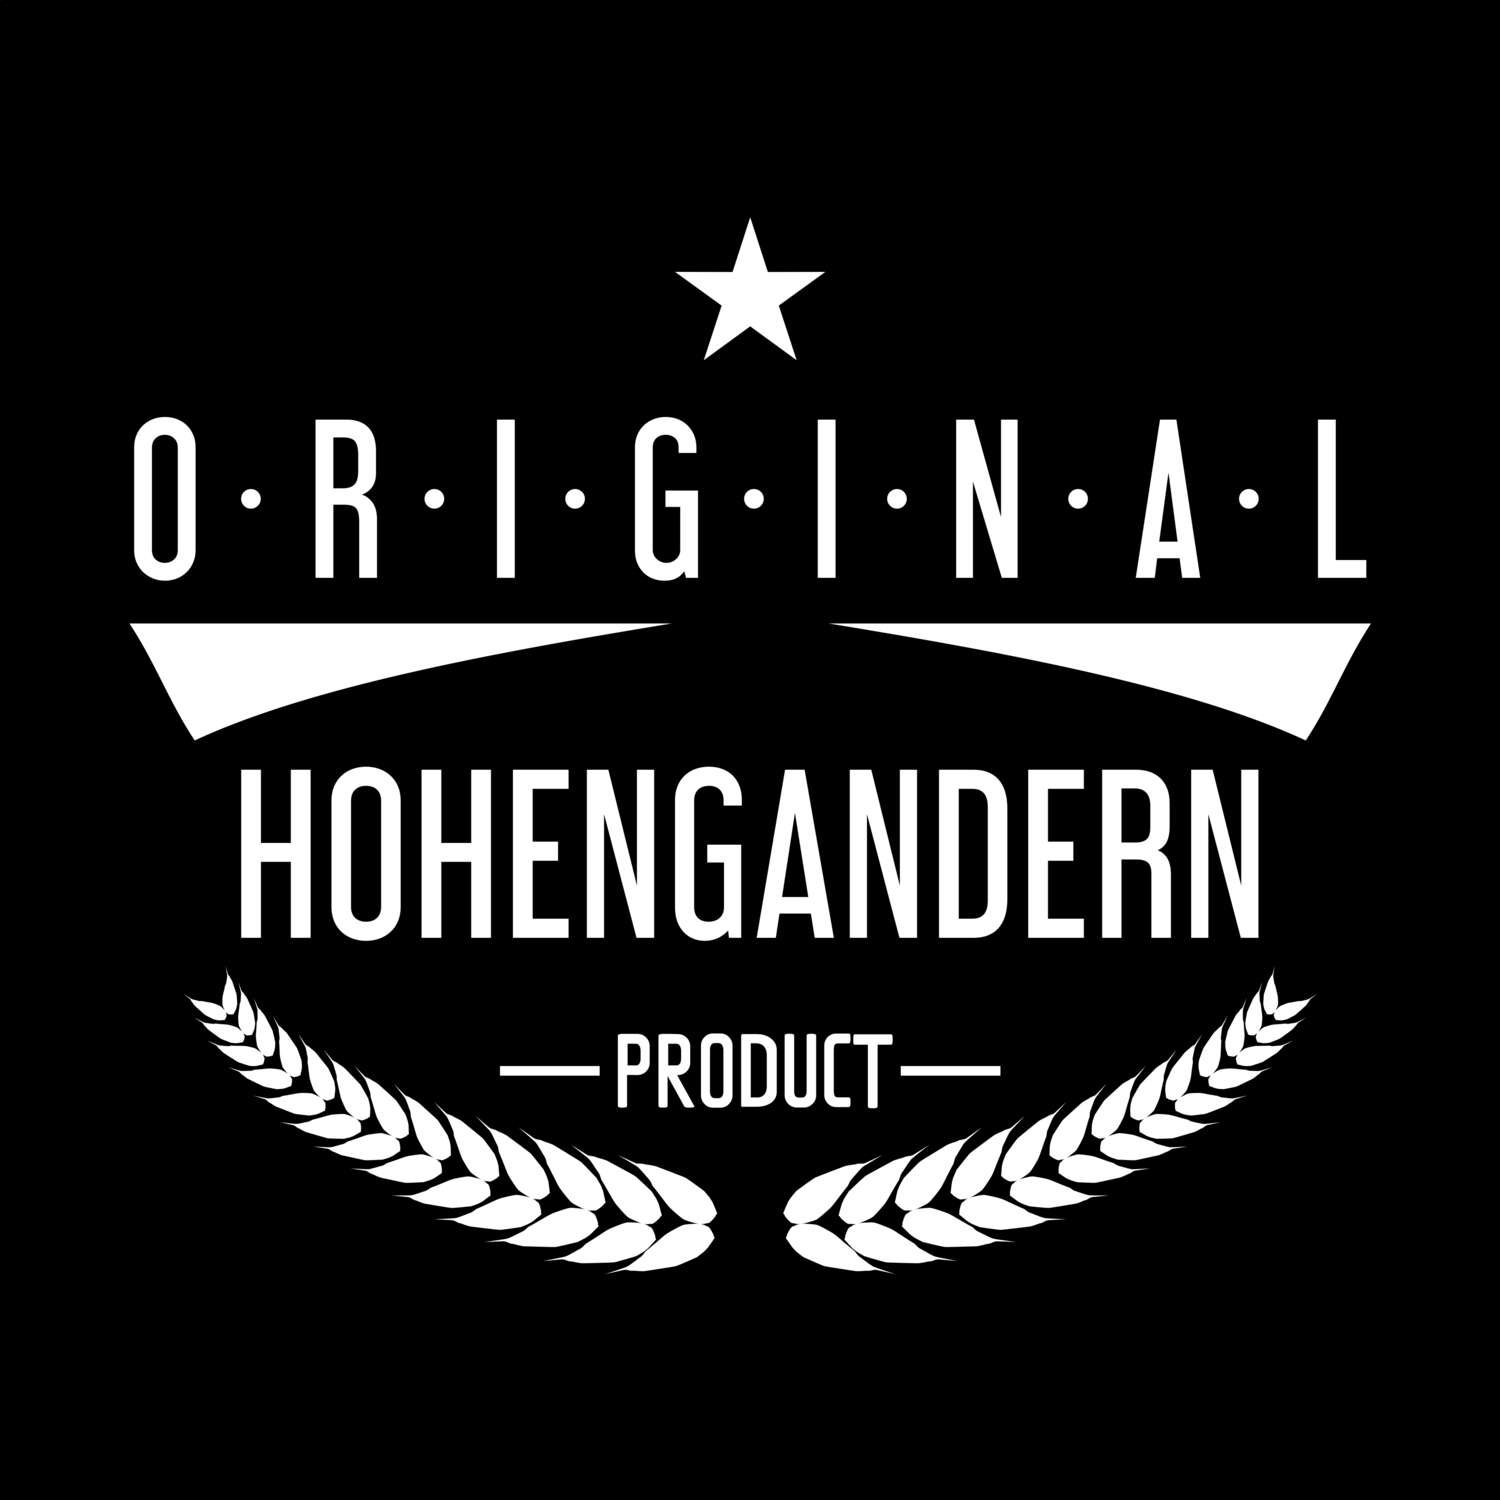 Hohengandern T-Shirt »Original Product«